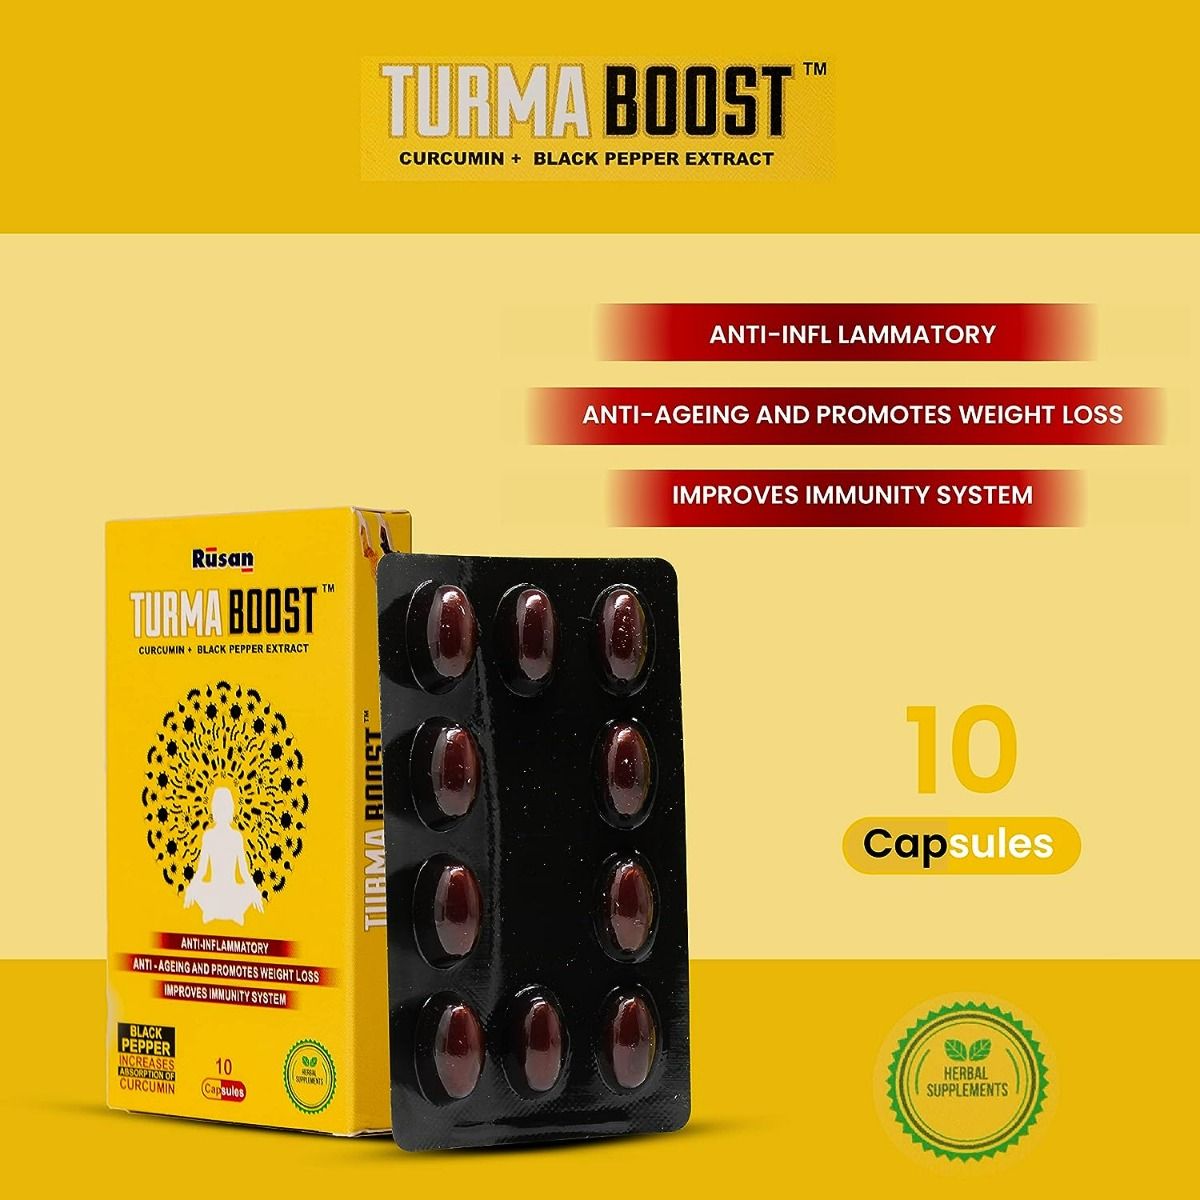 Turma Boost Curcumin + Black Pepper Extract, 10 Capsules, Pack of 10 S